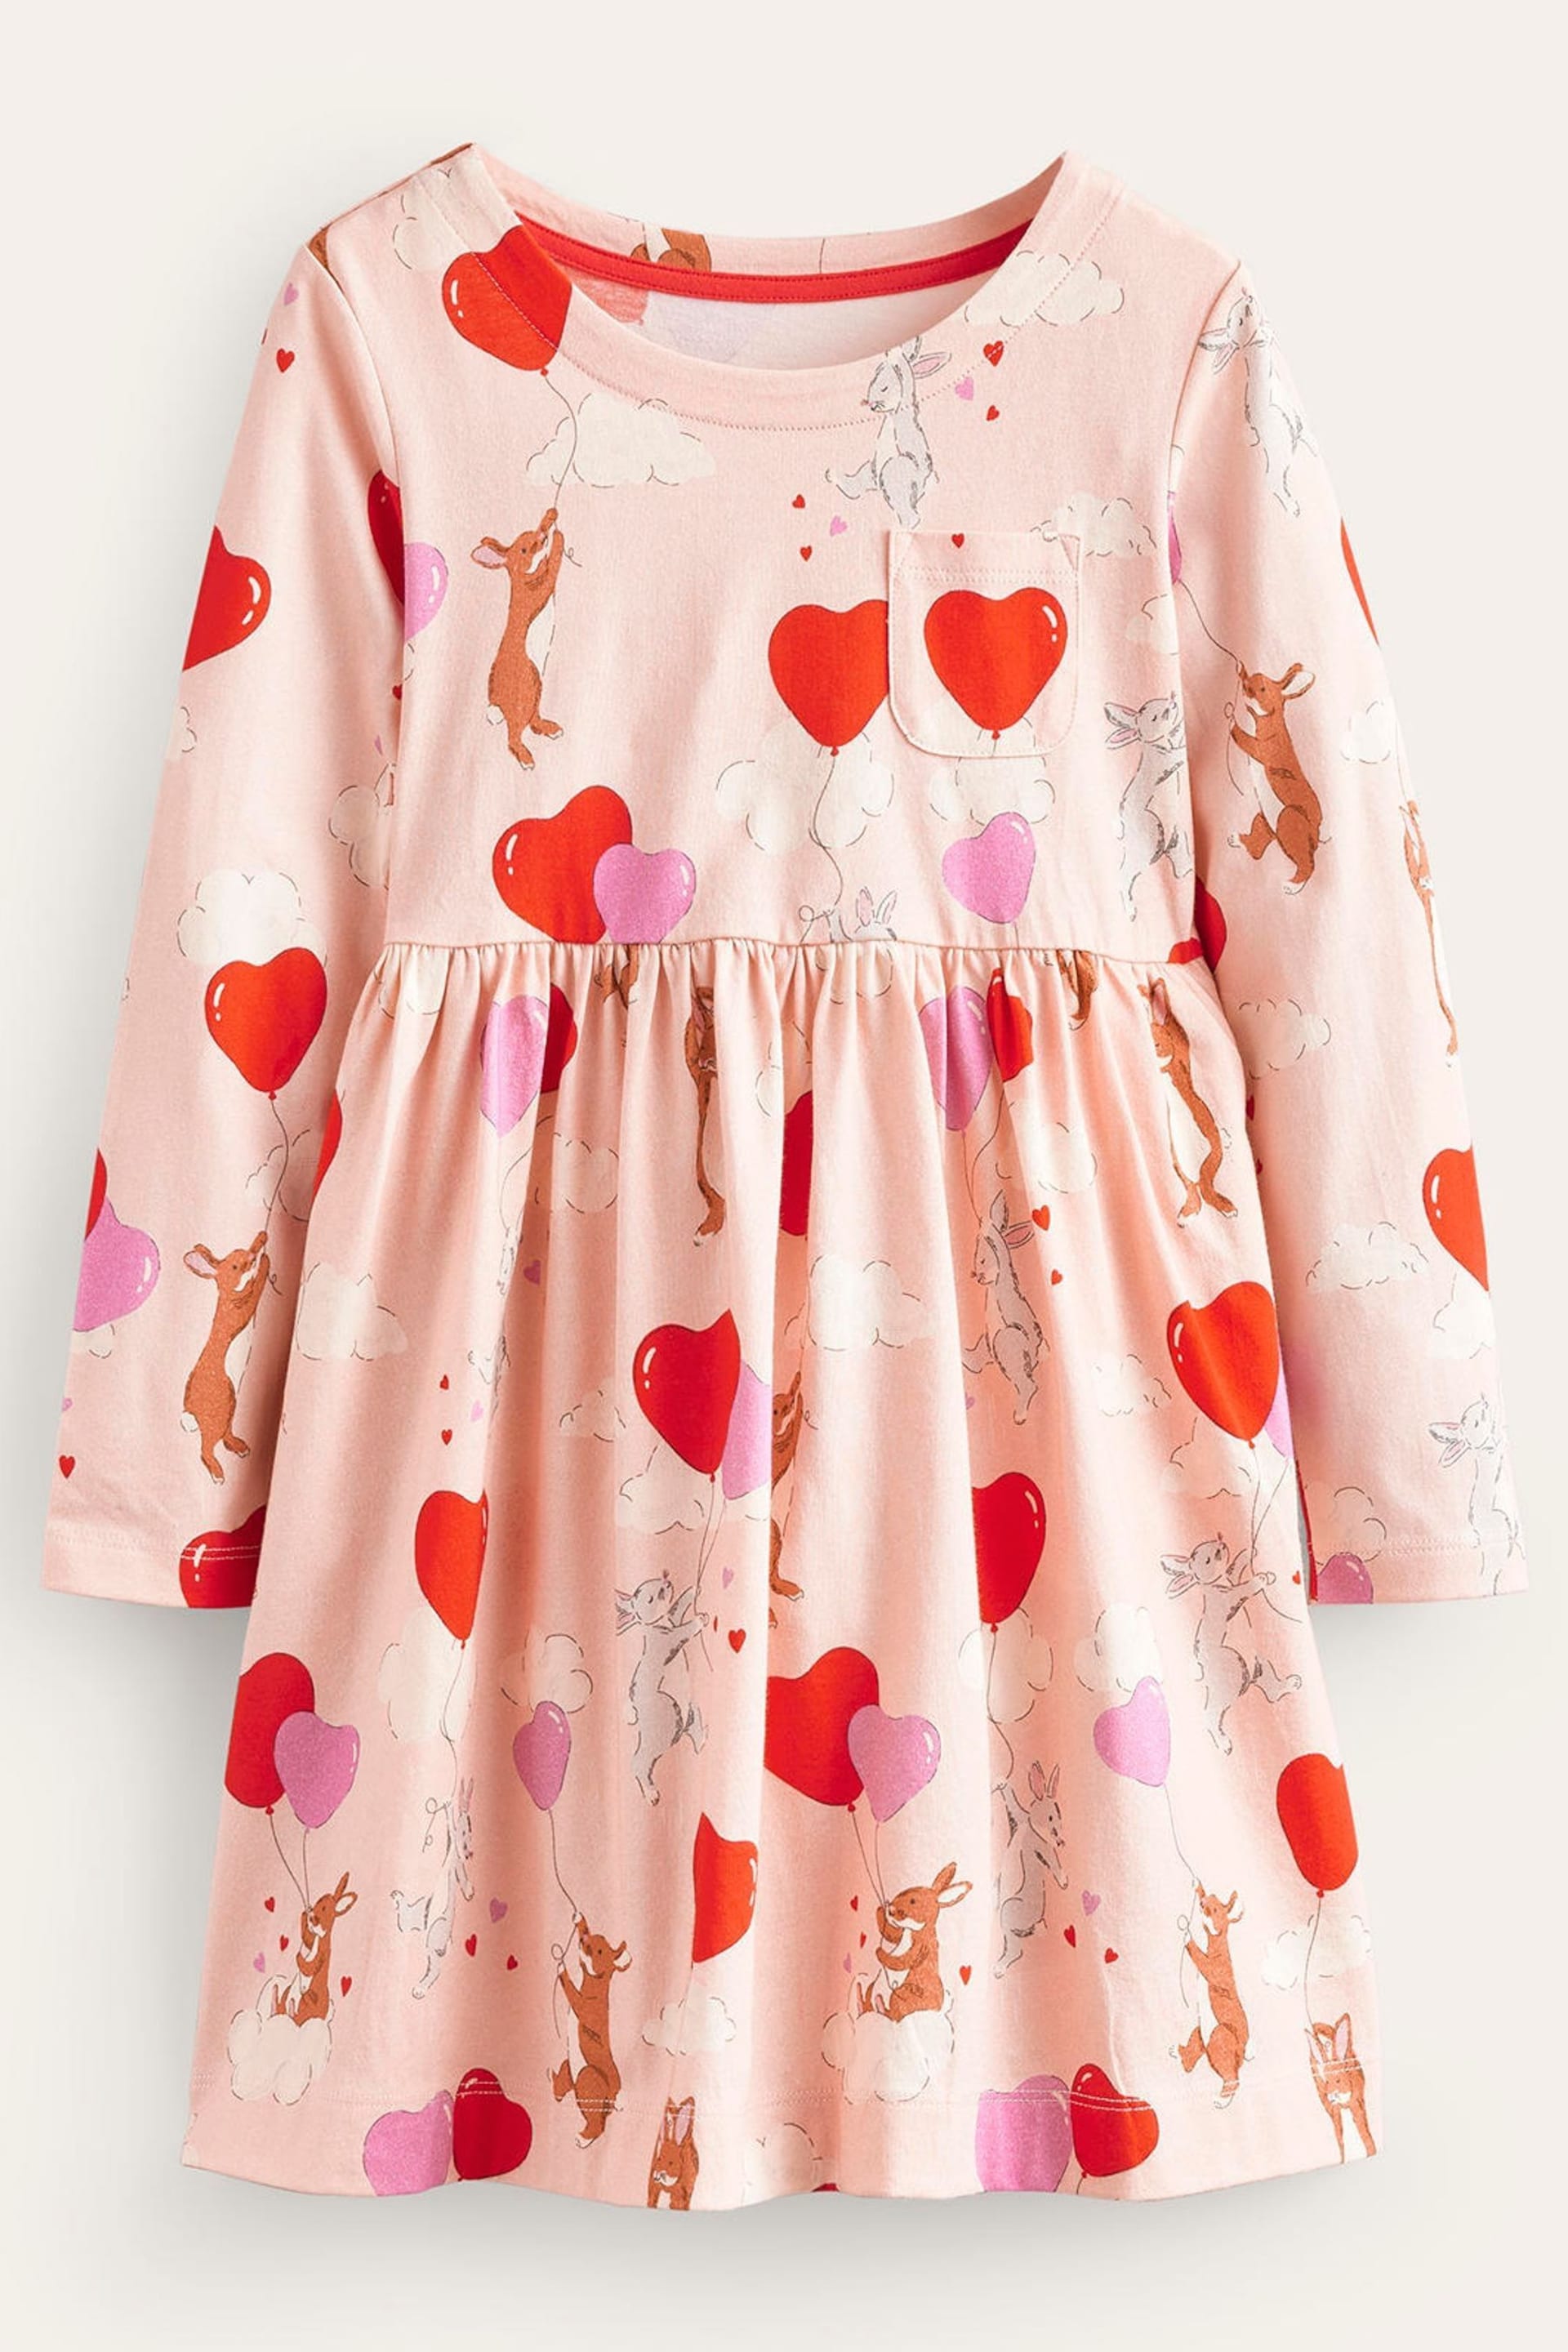 Boden Pink Long Sleeve Fun Heart Bunny Jersey Dress - Image 2 of 4